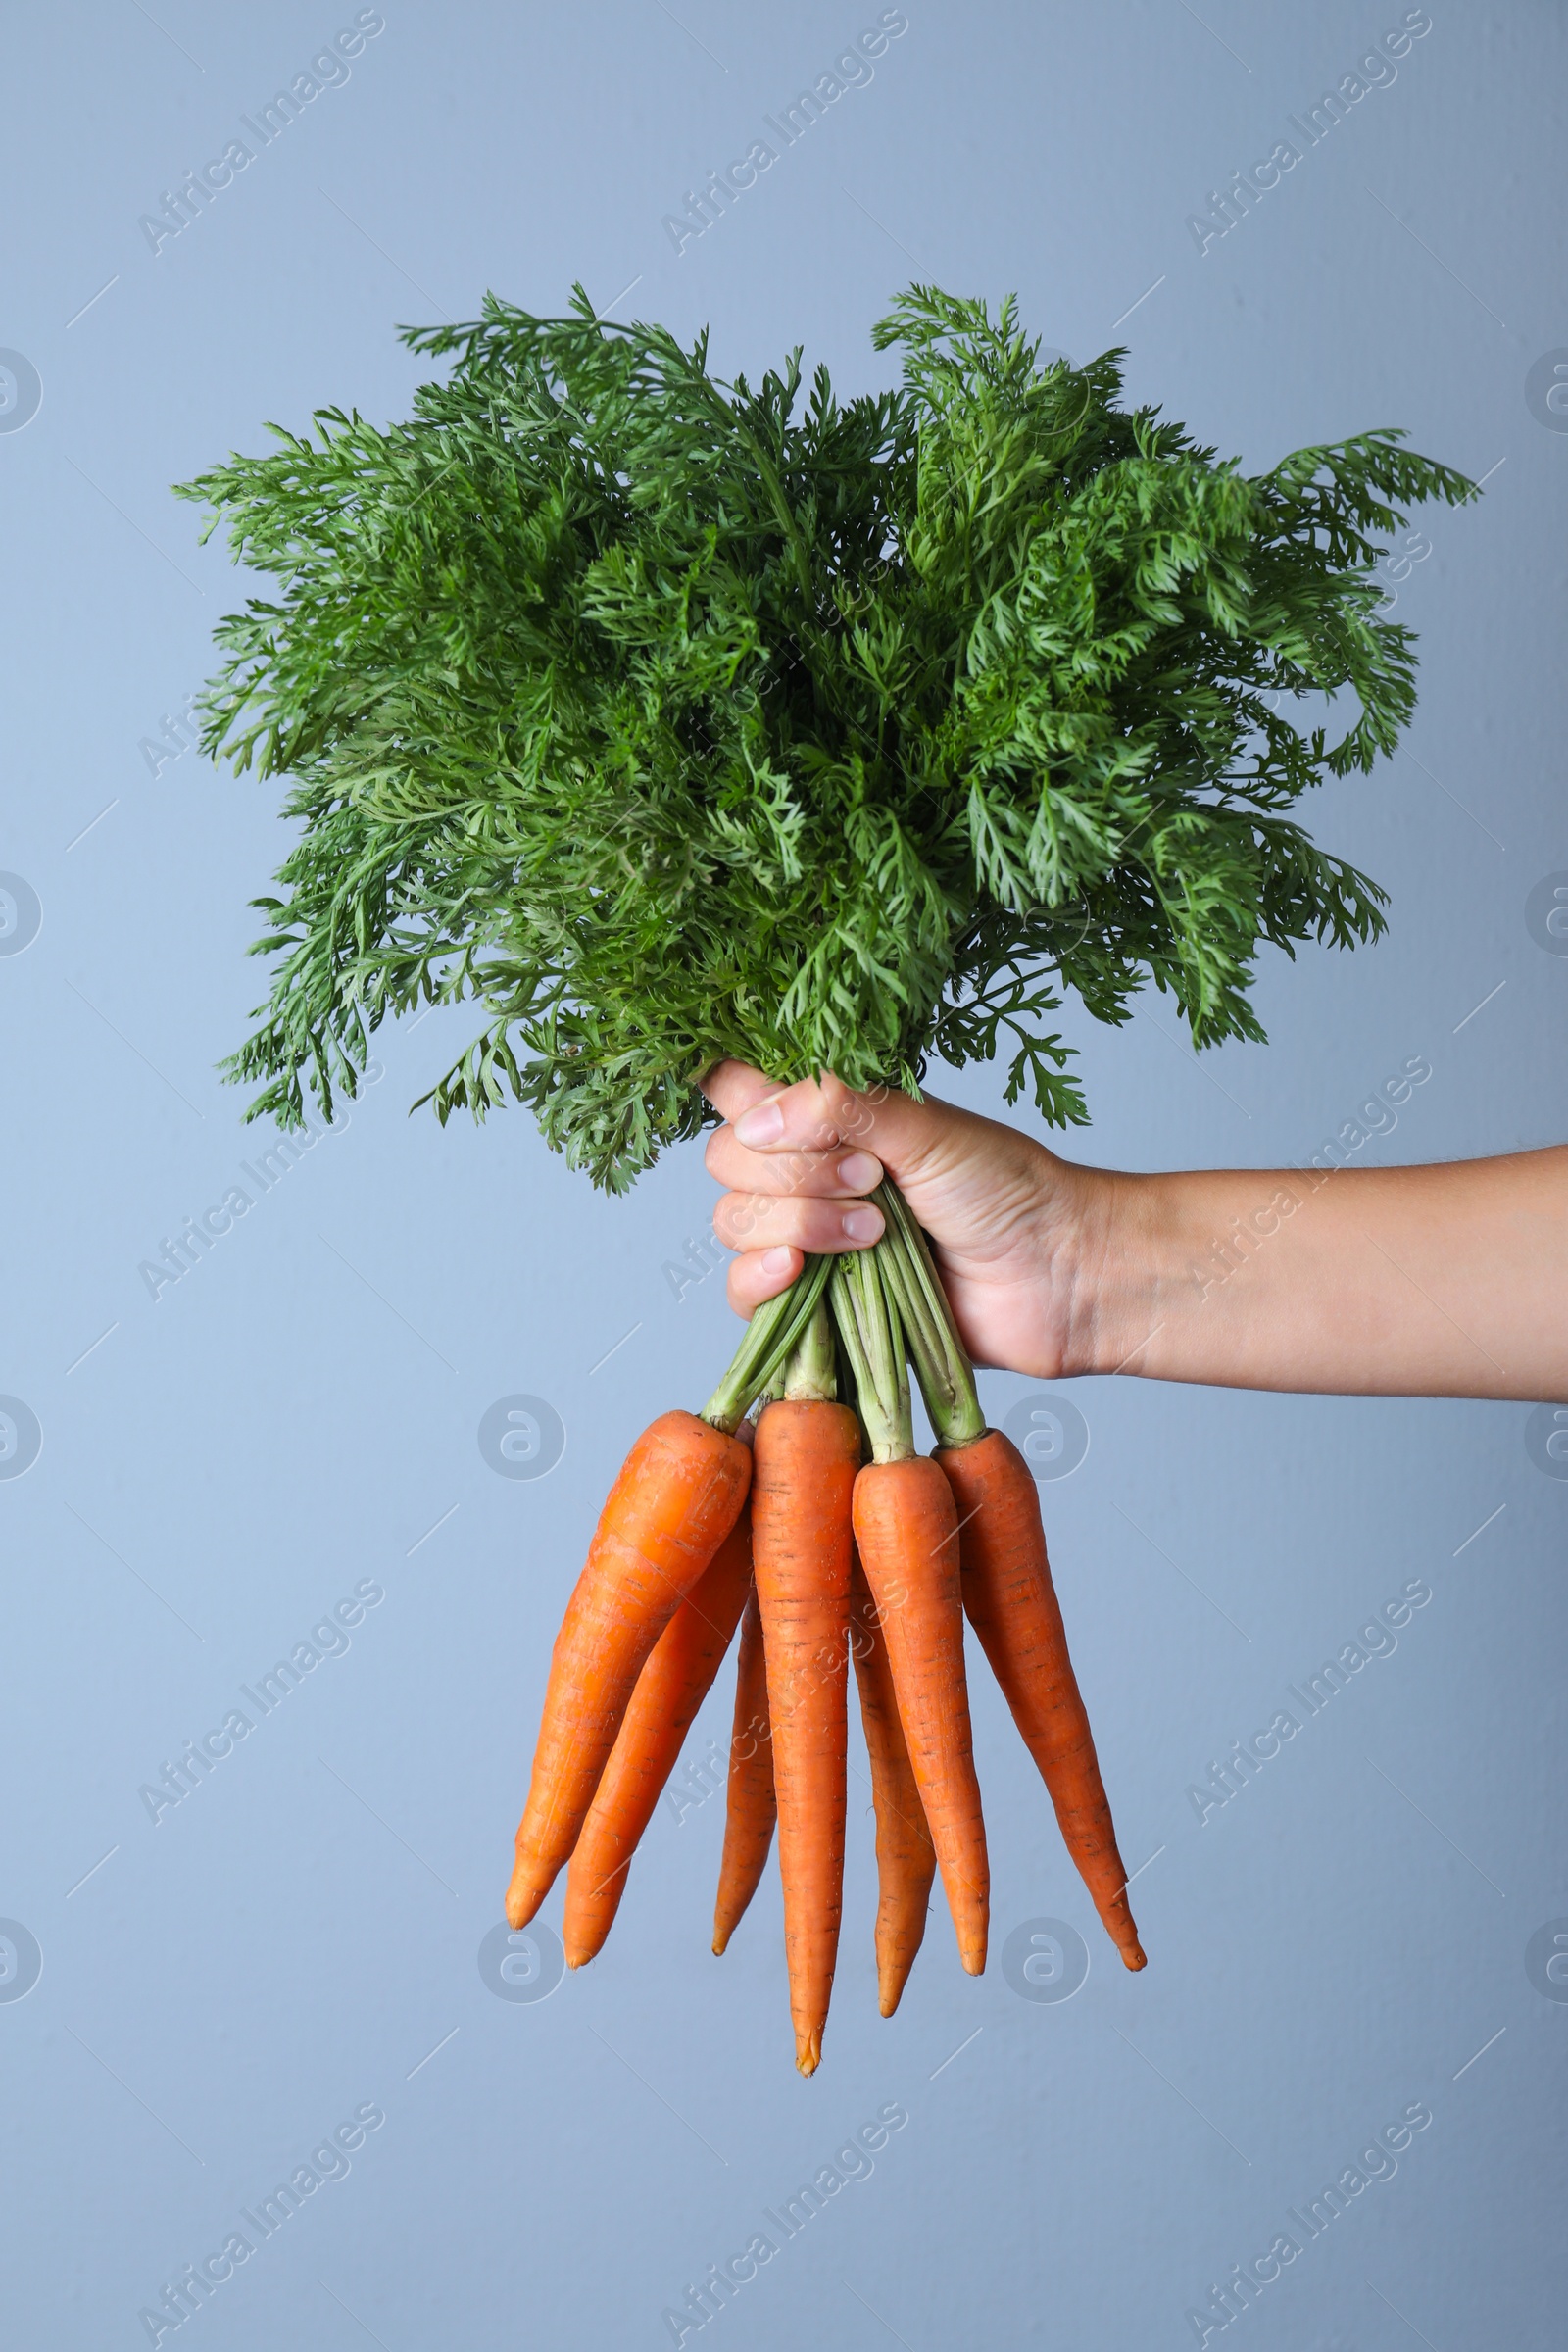 Photo of Woman holding ripe carrots on light blue background, closeup